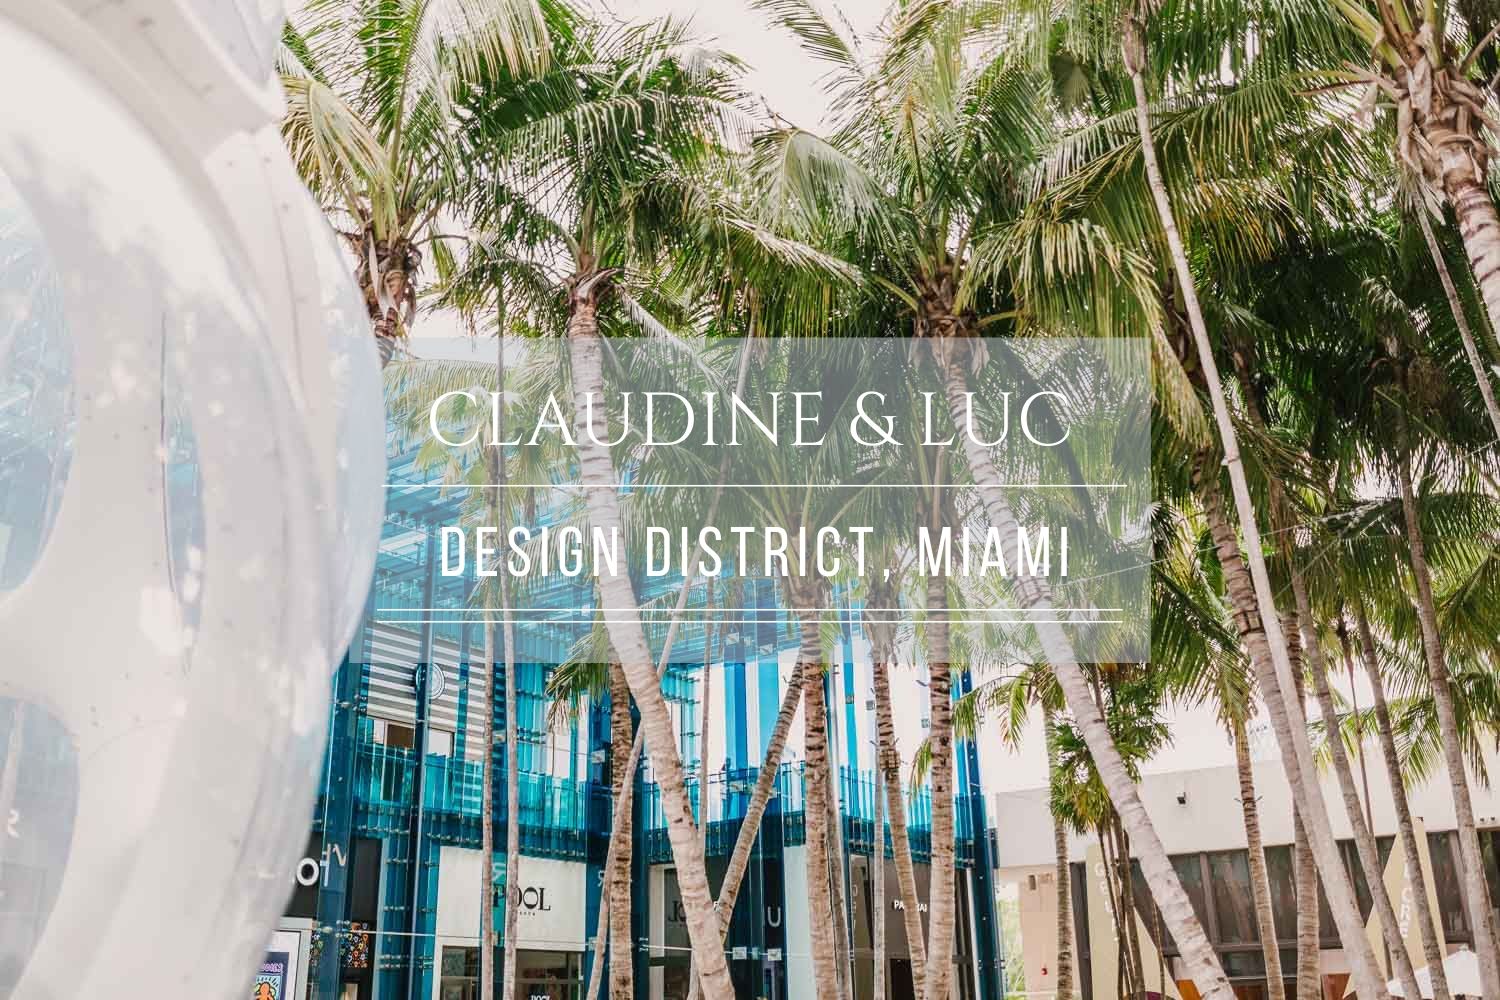 Miami Design District (@miamidesigndistrict) • Instagram photos and videos